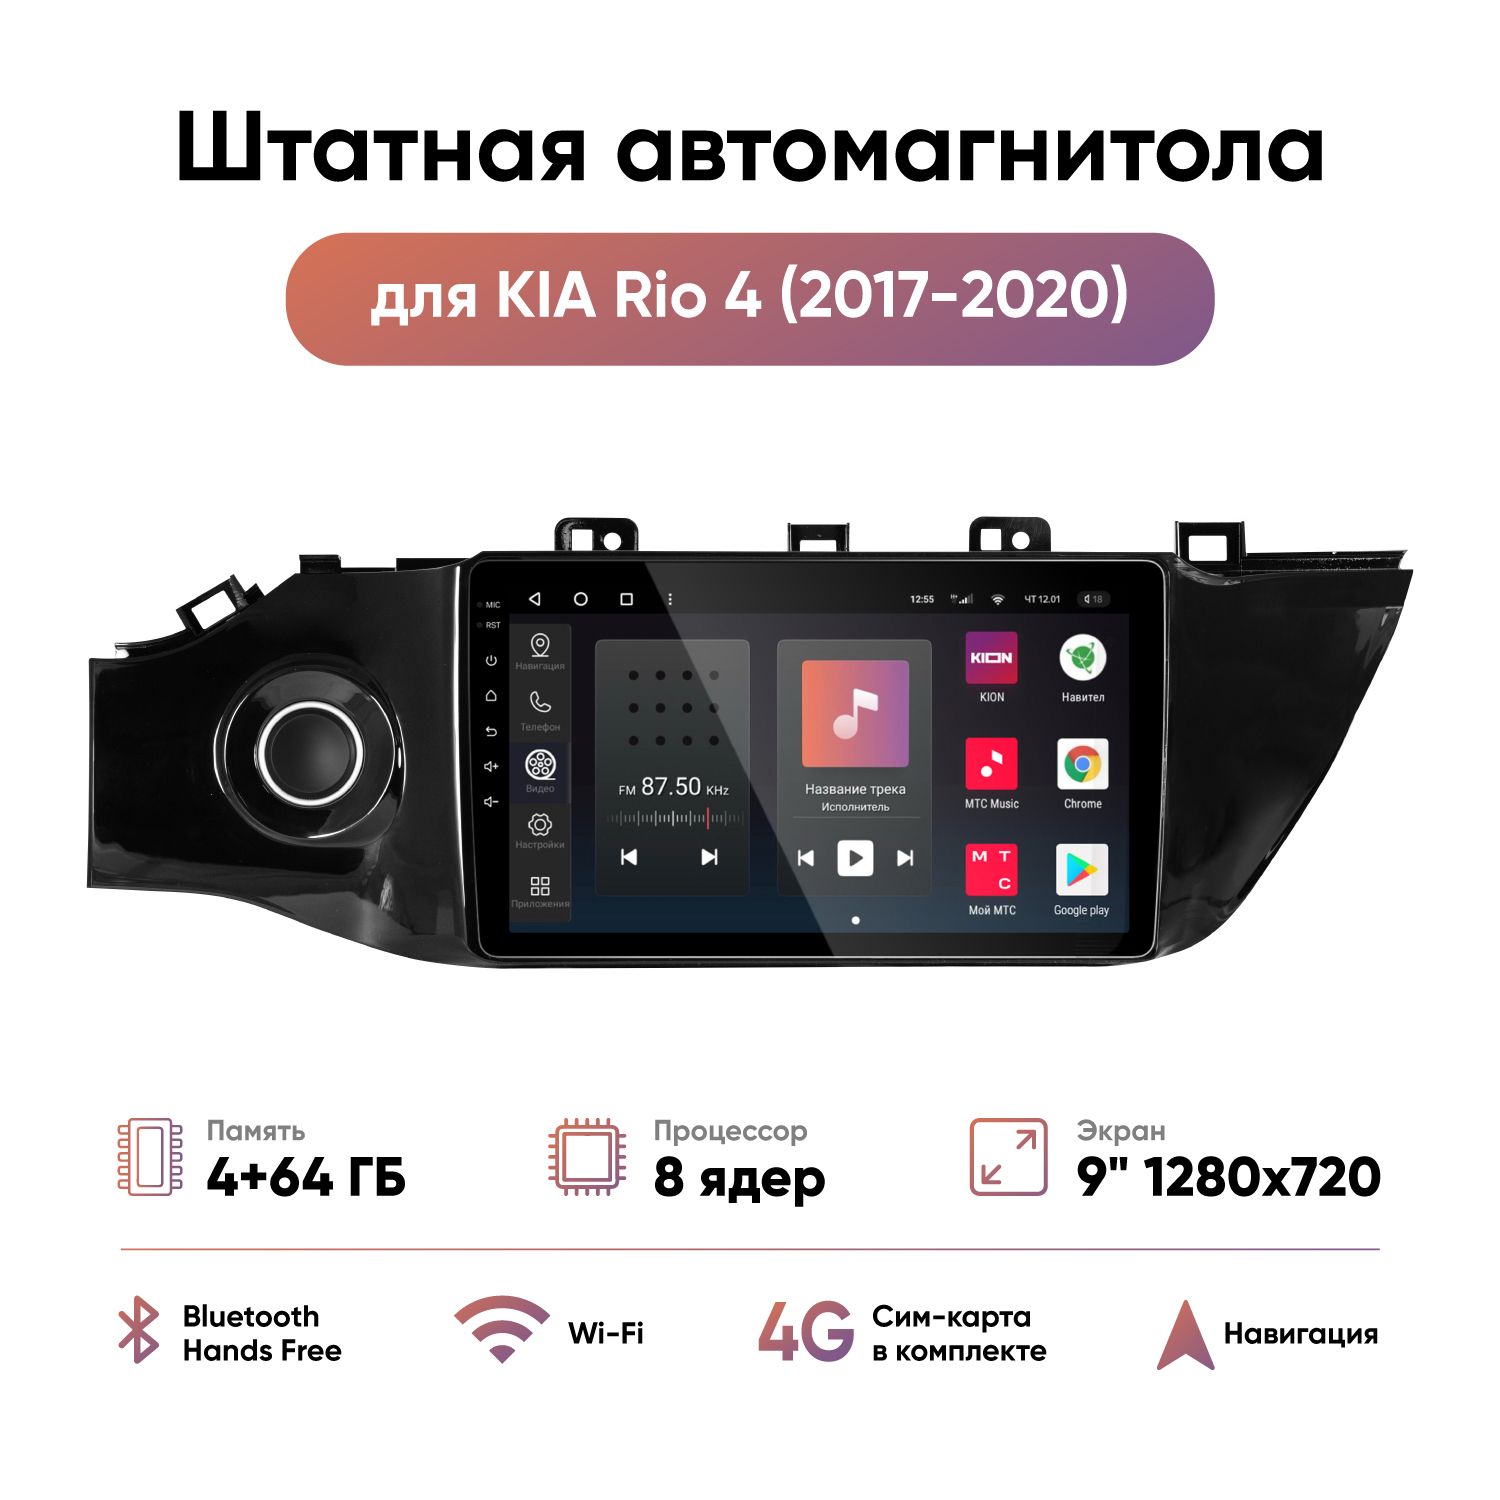 ШтатнаяавтомобильнаямагнитоладляКиаРио4(2017-2020)Android9"4+64GB